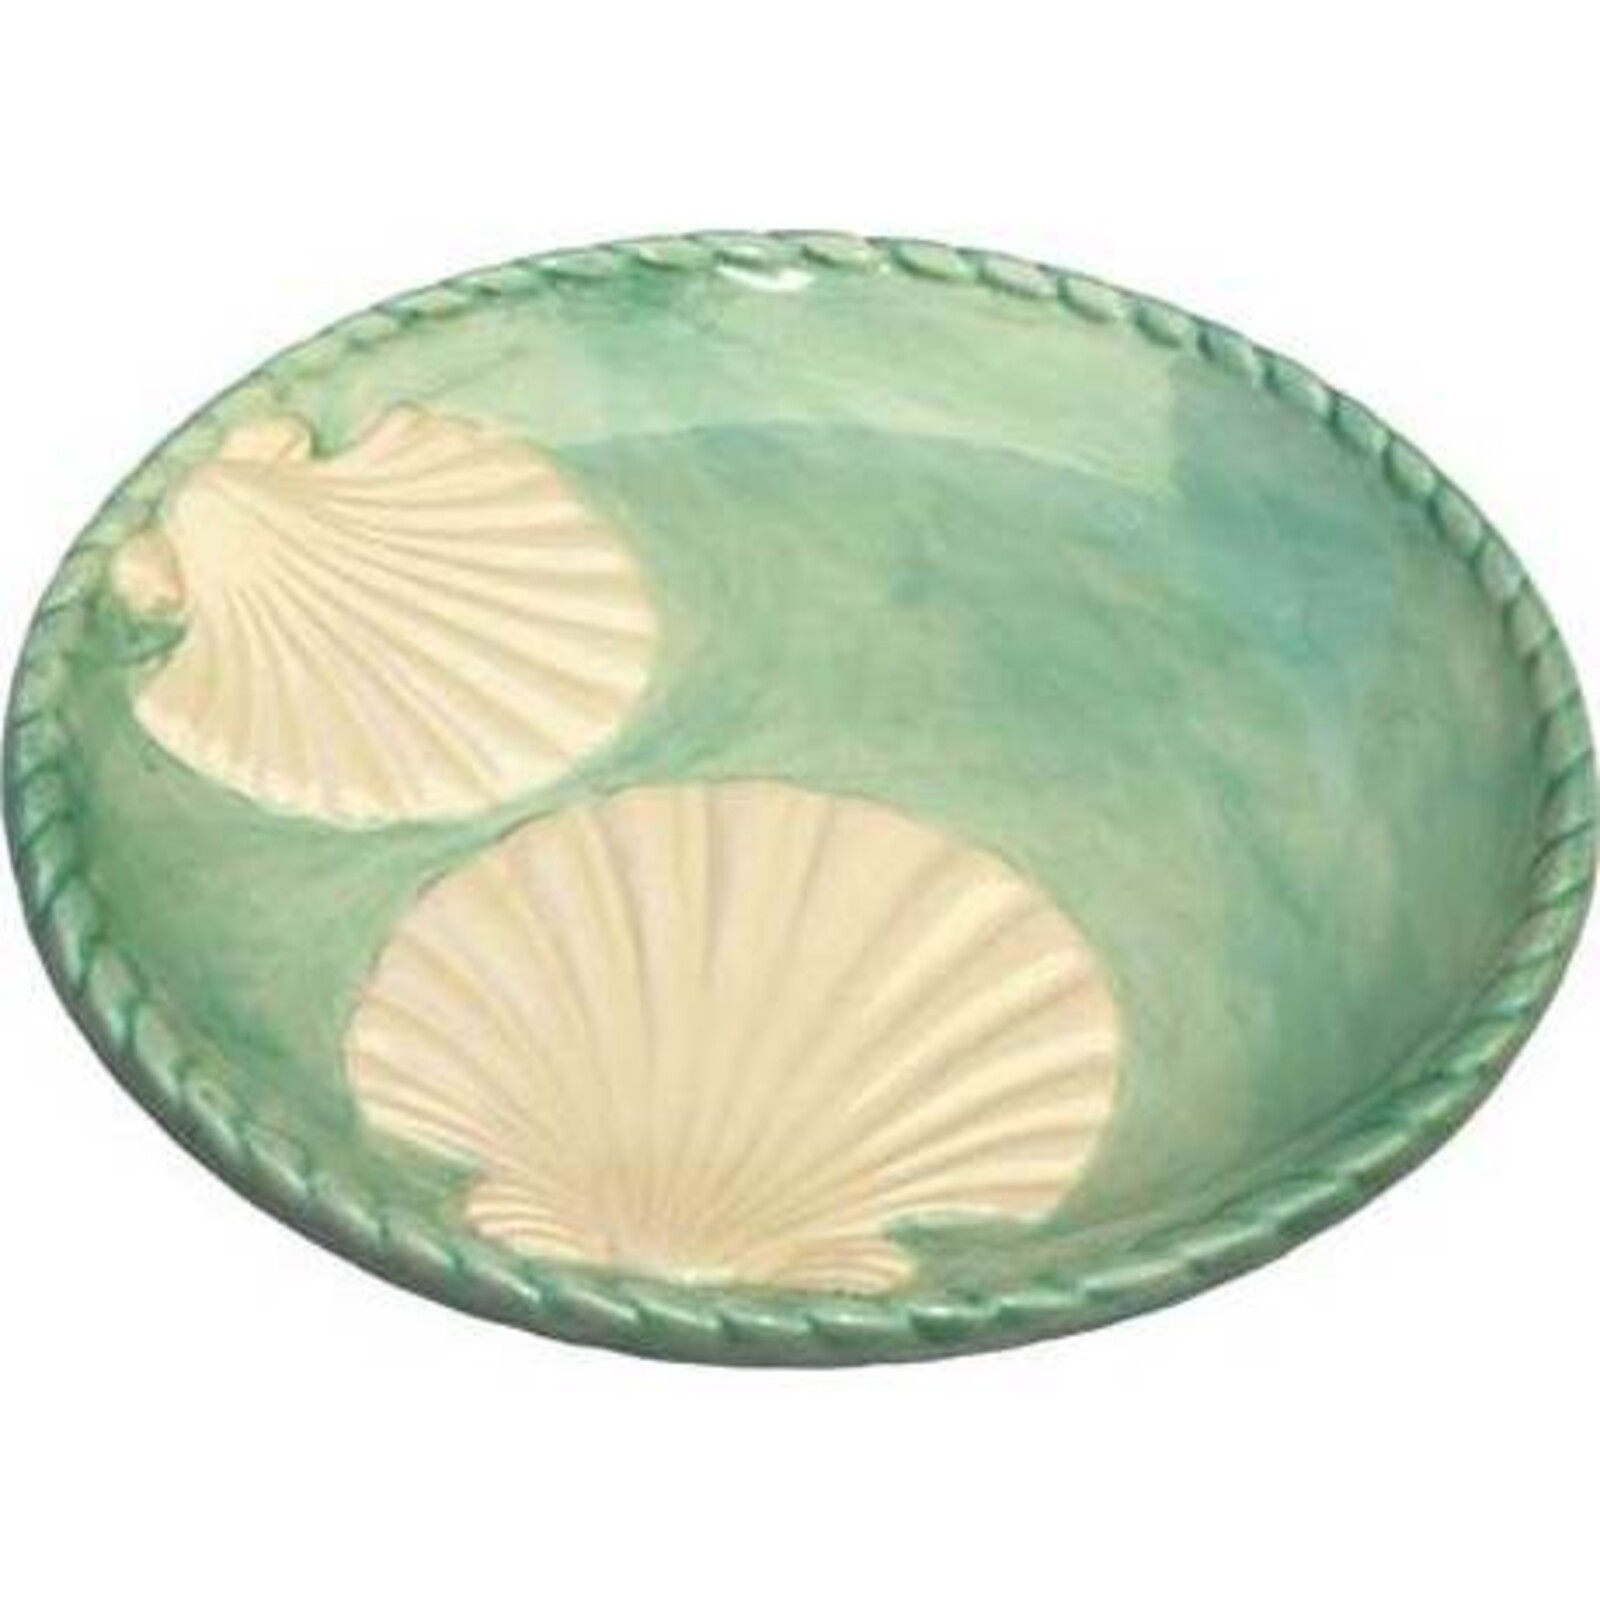 Plate Scallop Shell